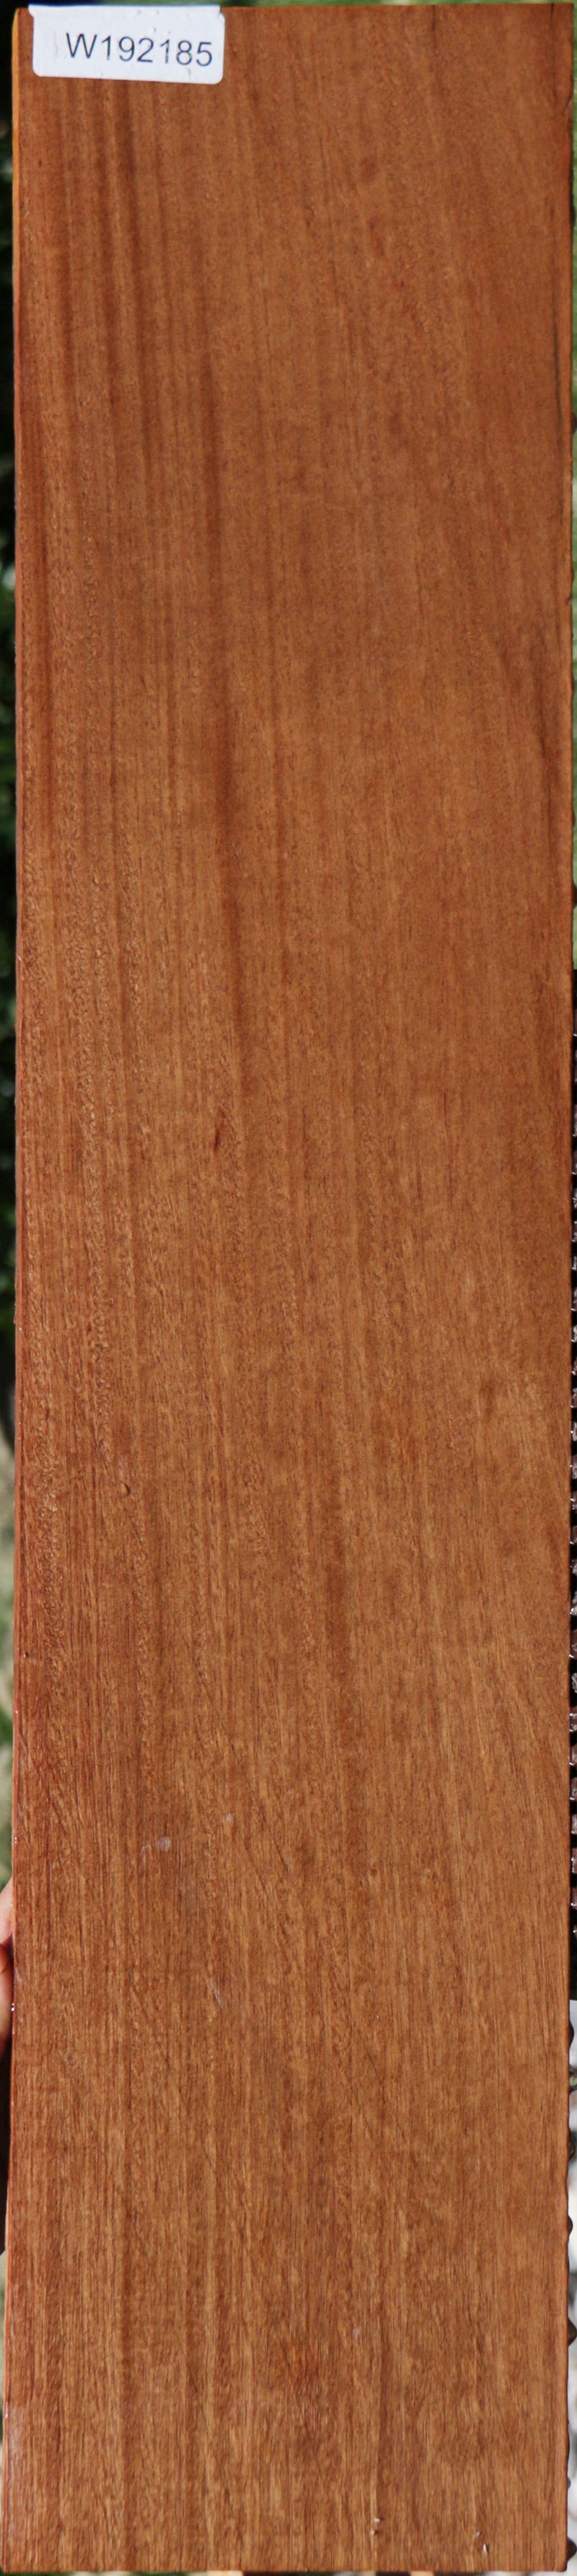 Santos Mahogany Lumber